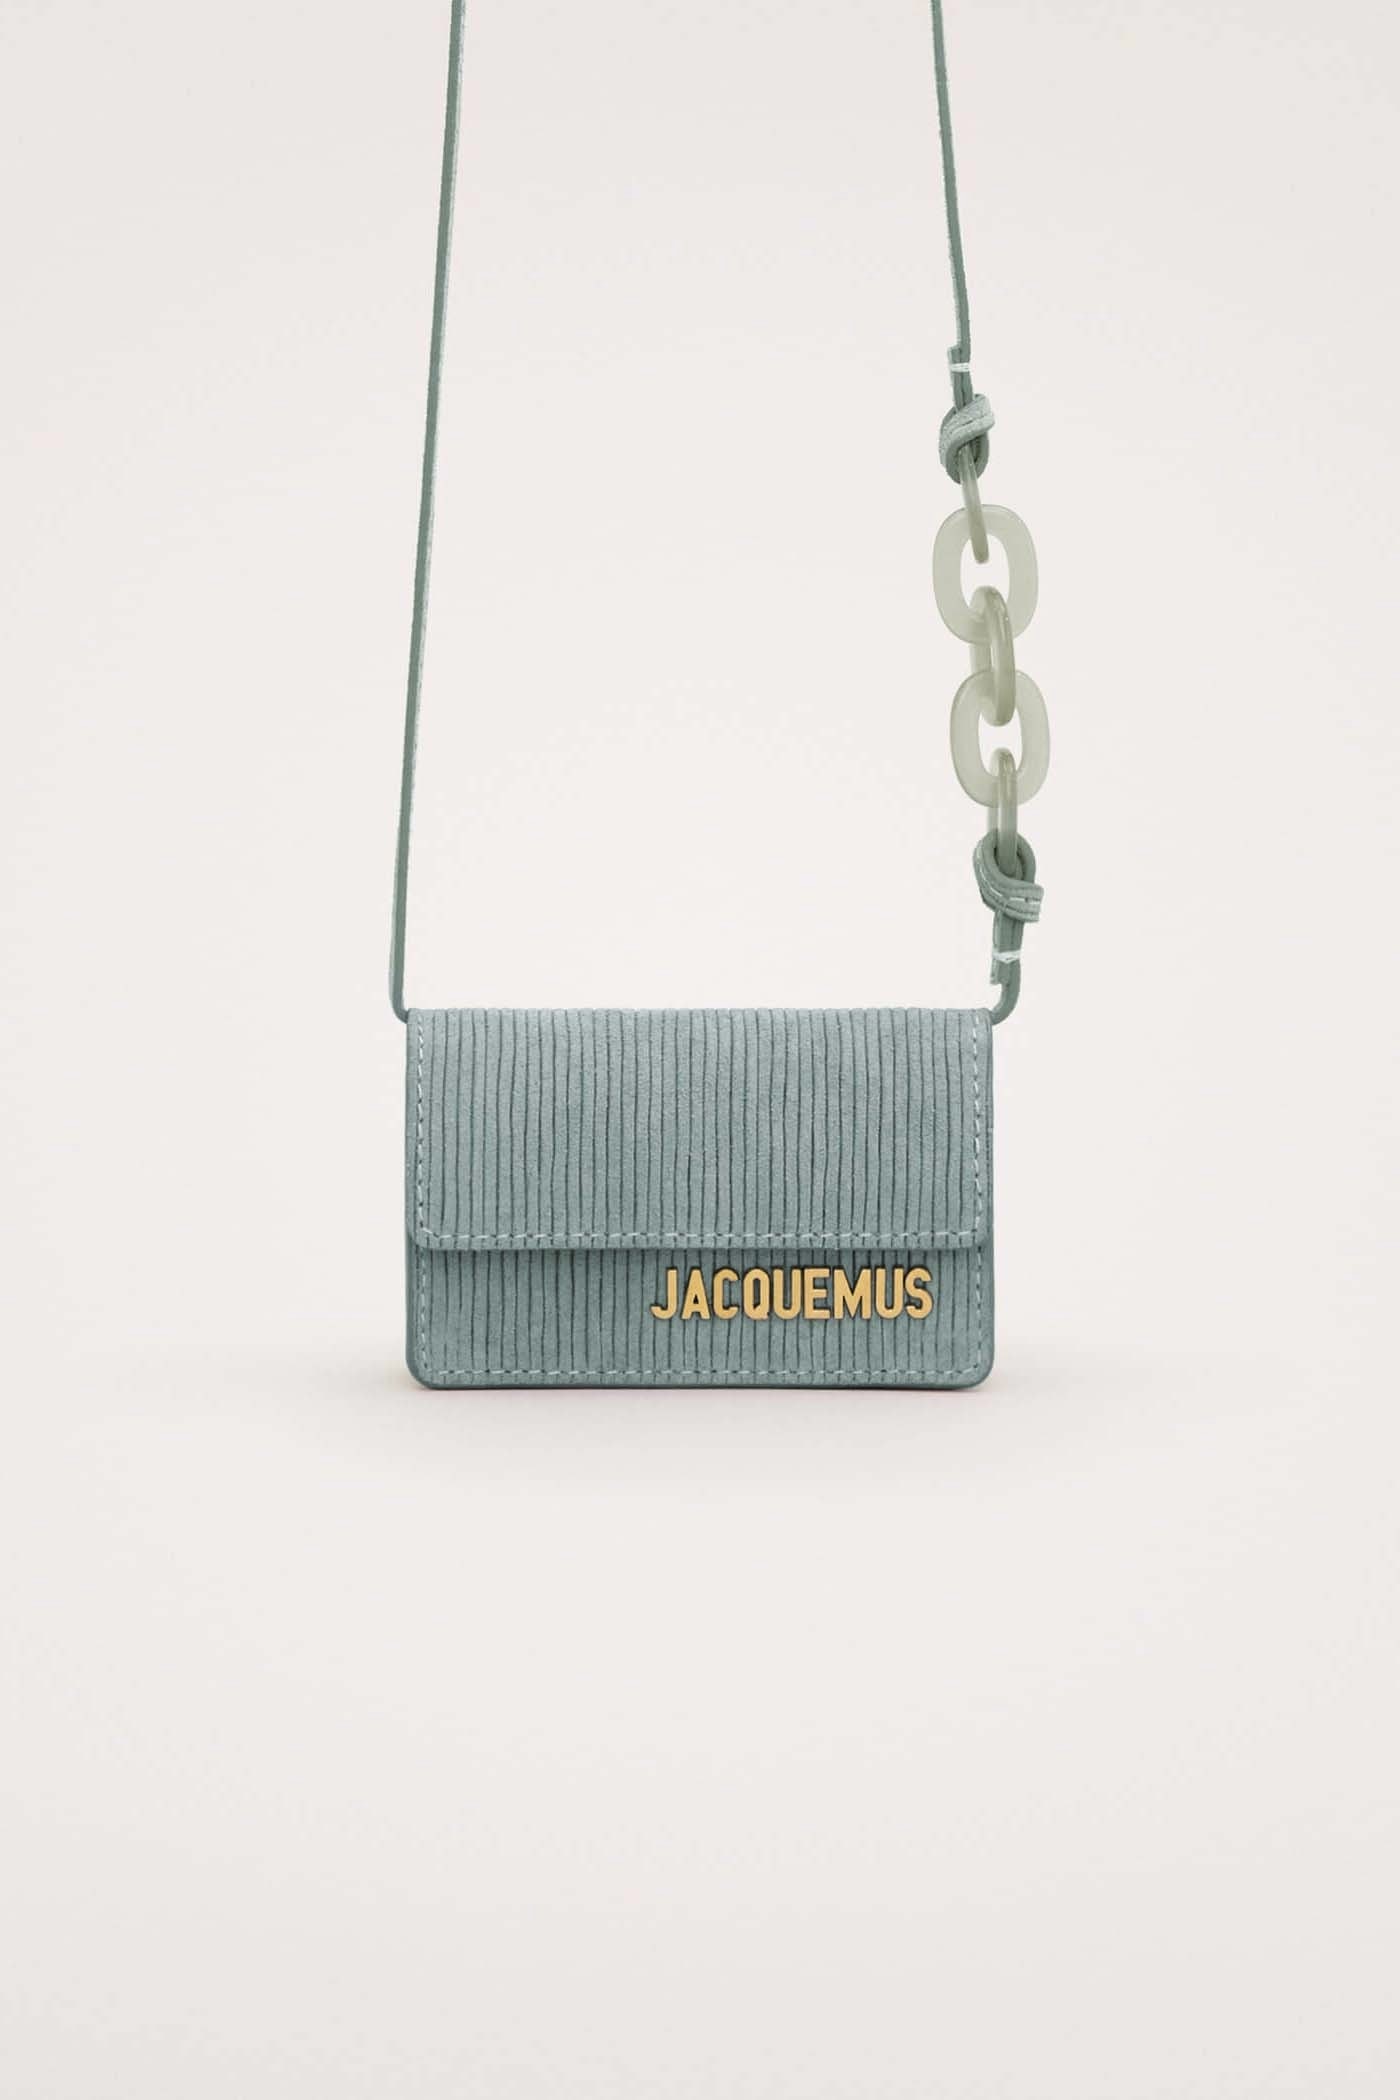 jacquemus fall winter 2020 bags le chiquito mini bag shoes sandals handbags accessories